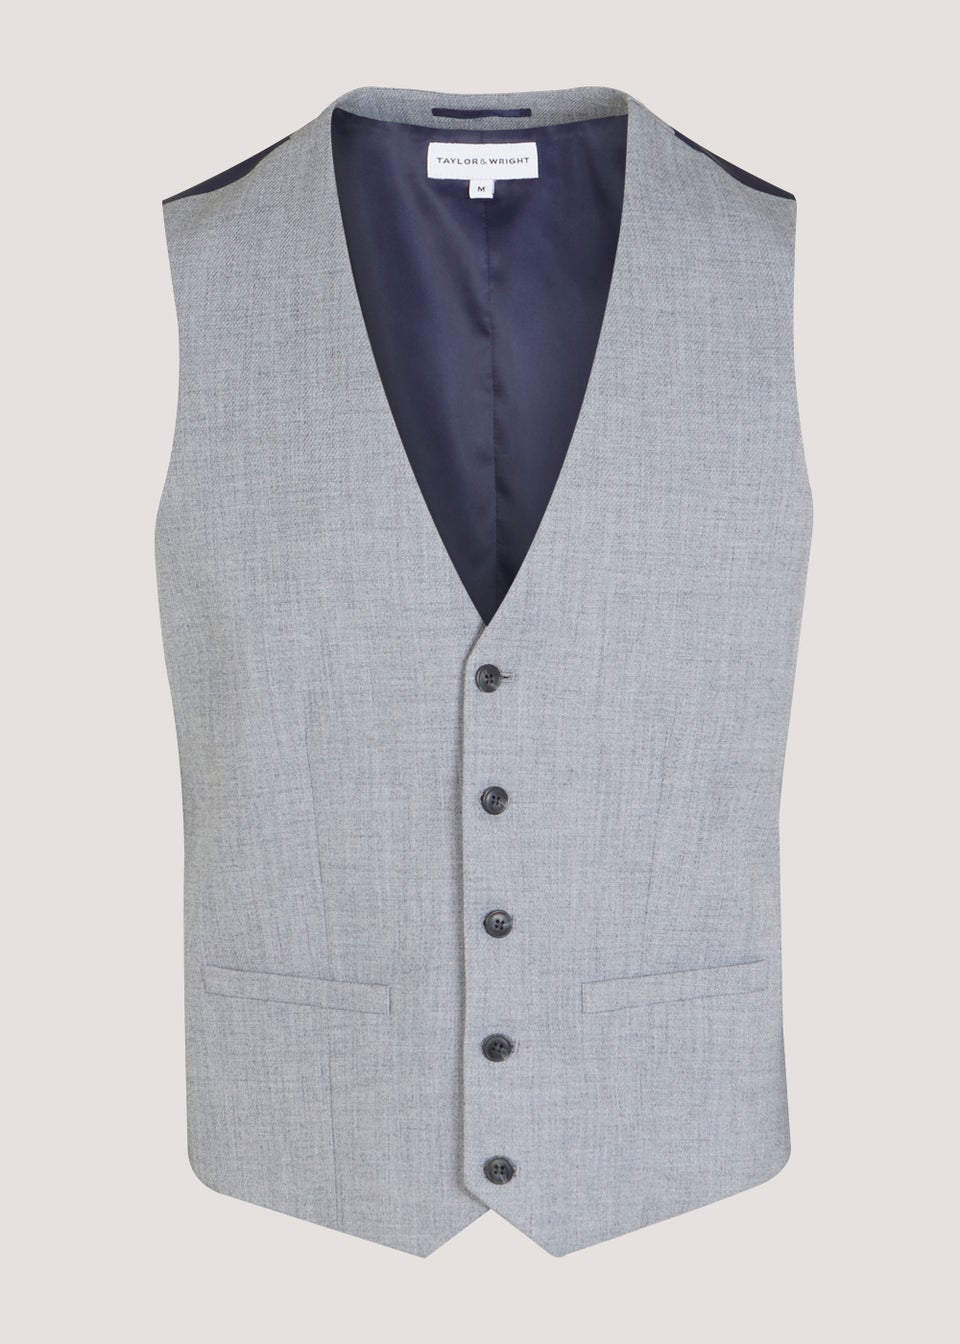 Mens Tailcoat Wedding Suit Jacket Trousers Waistcoat Royal Ascot Silver Grey  Top | eBay